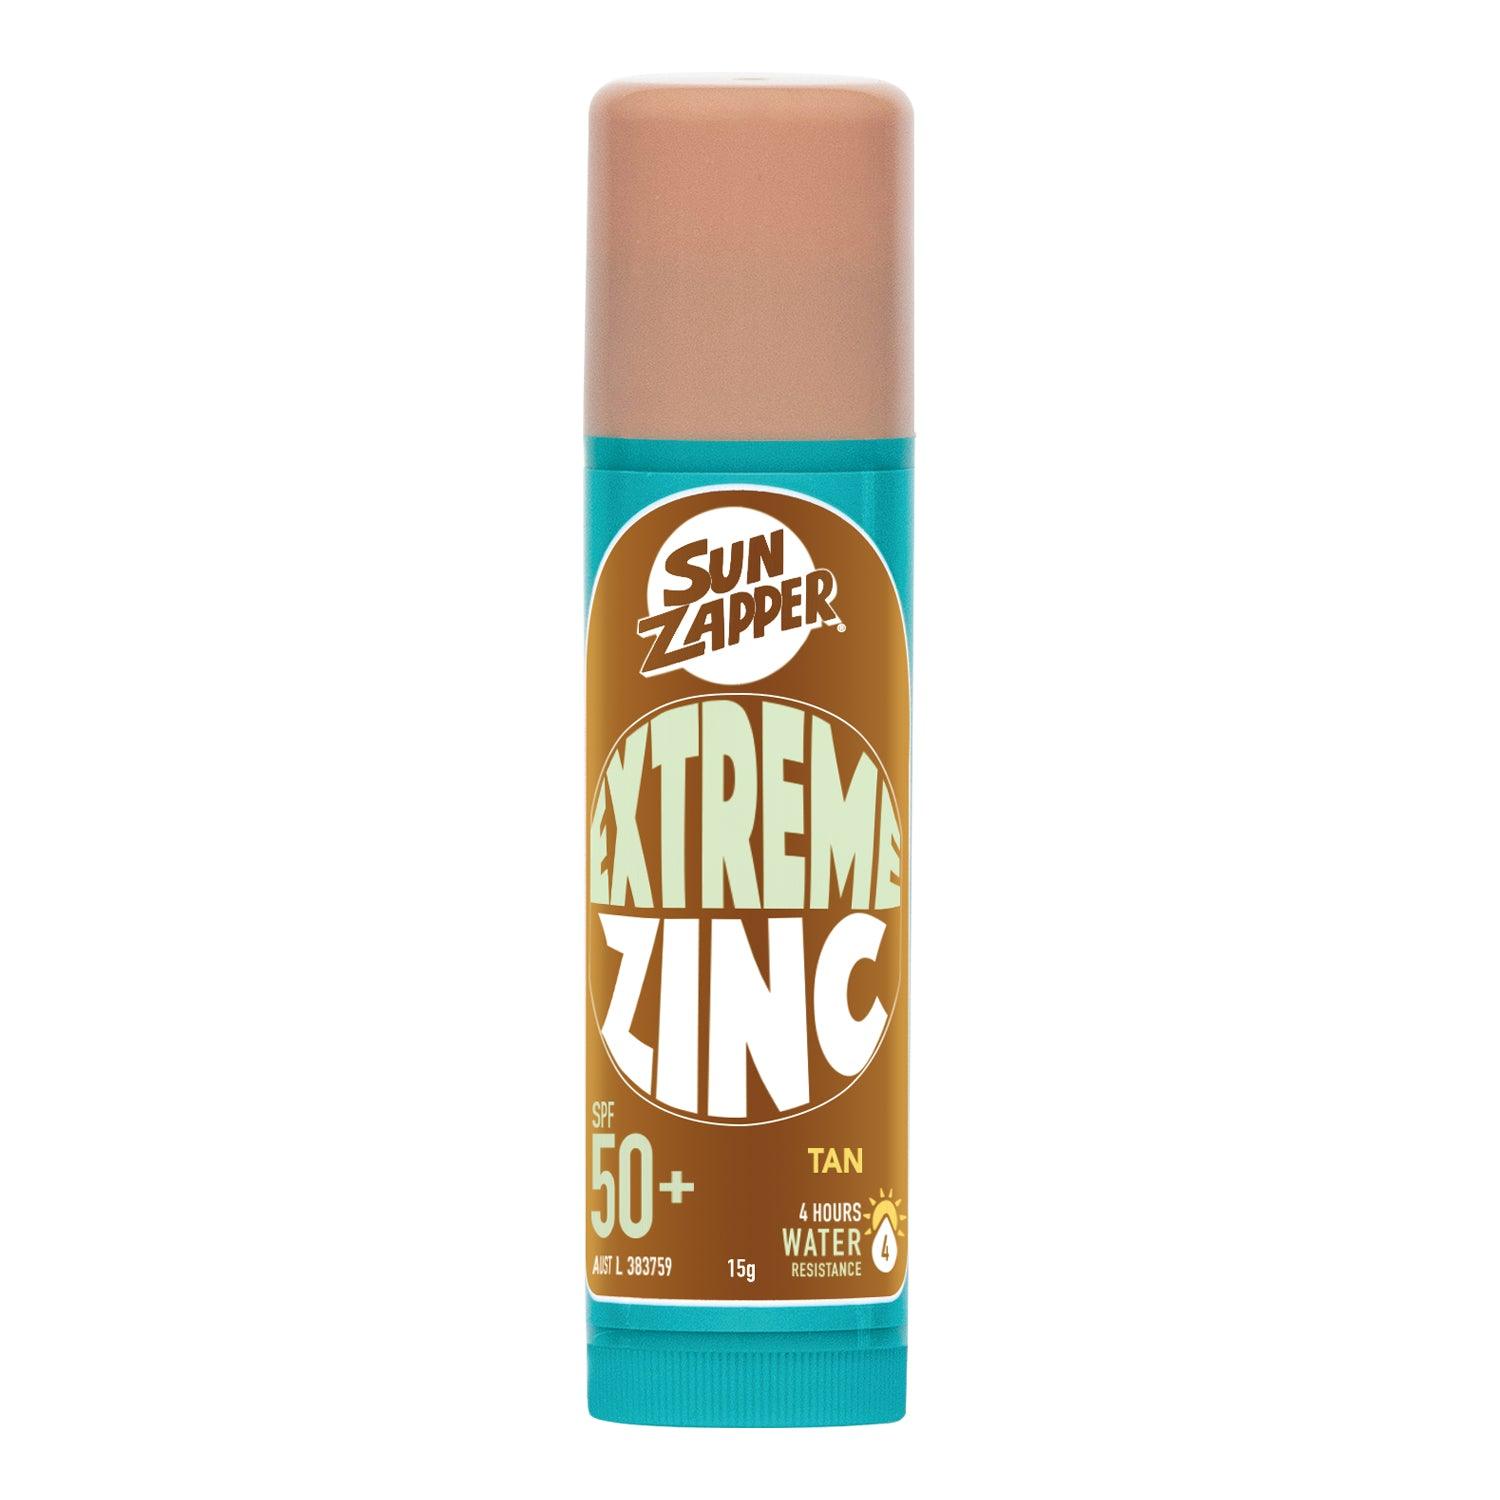 Sun Zapper Extreme Zinc Stick SPF50+ (8 Colours) Zinc Sunscreen Stick - Sun Zapper UK